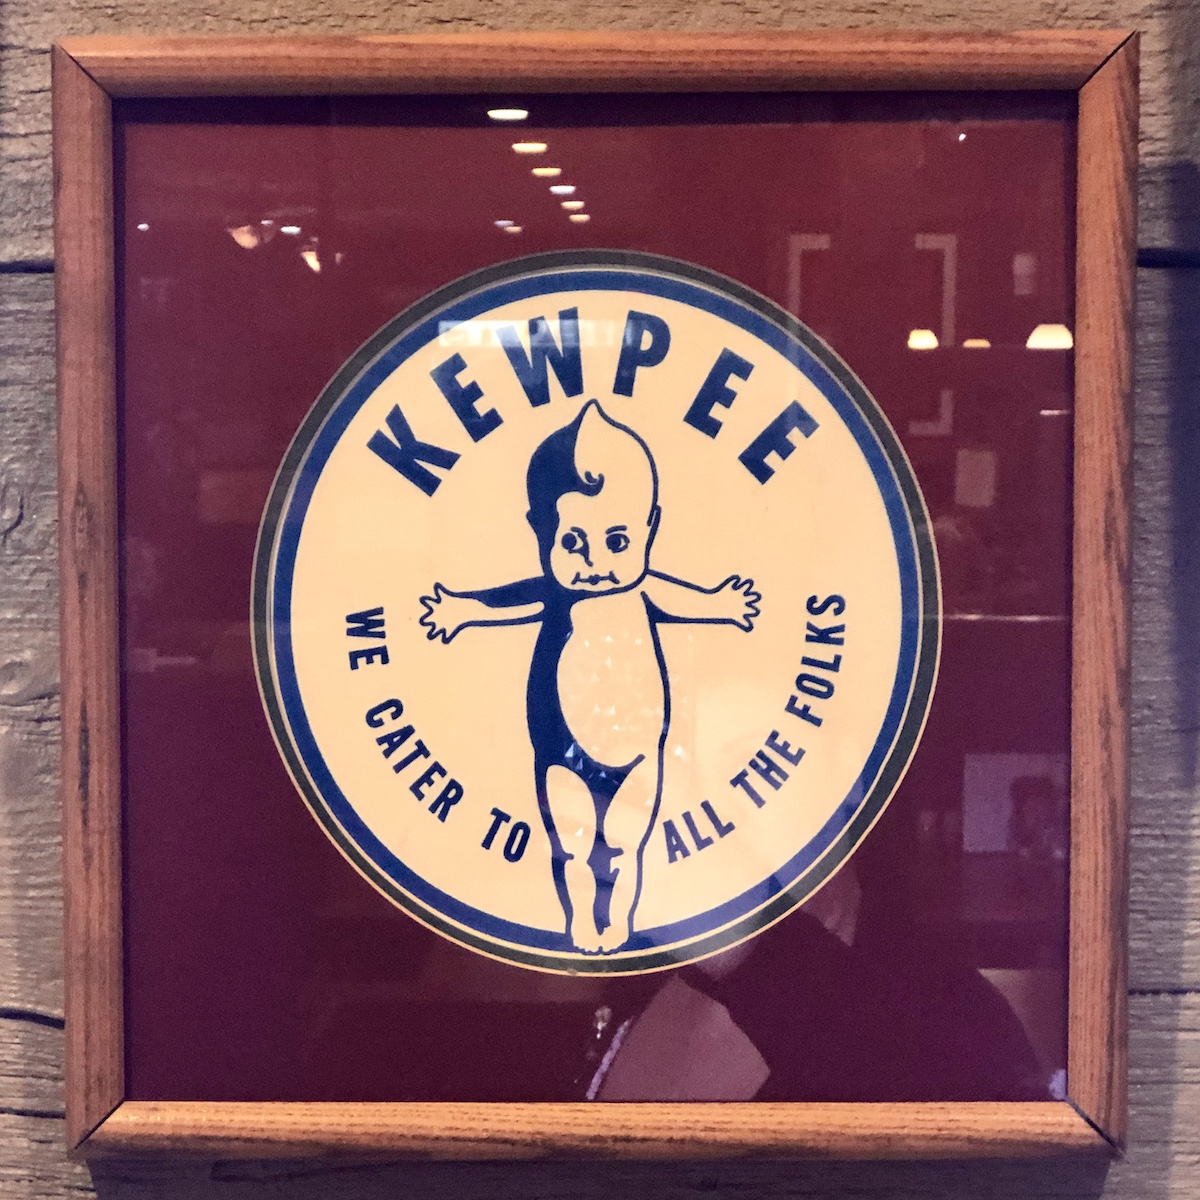 Kewpee We Cater Framed Sign from Weston's Kewpee Sandwich Shop in Lansing, Michigan